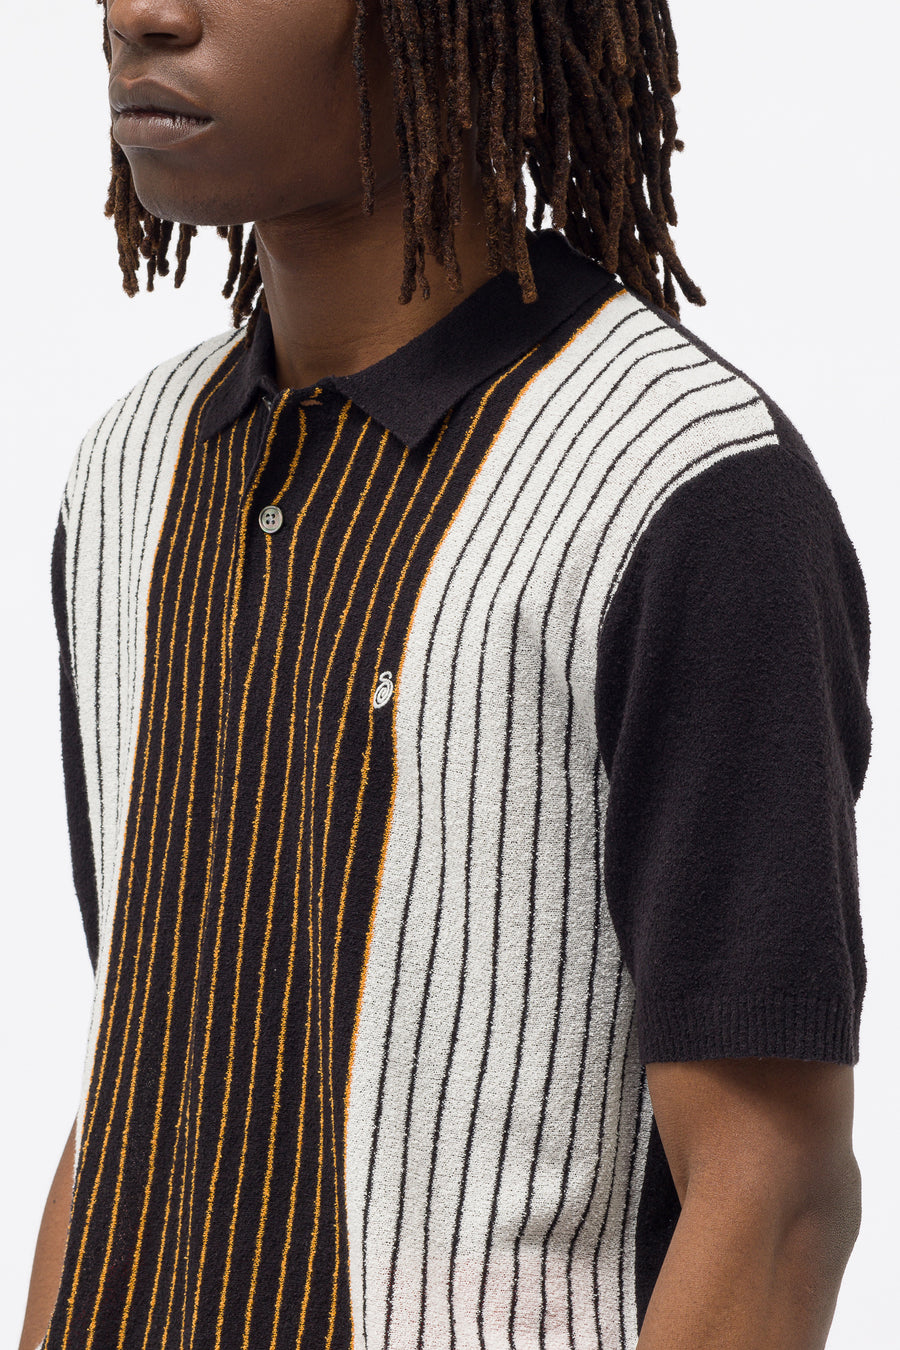 Stüssy - Men's Textured SS Polo Sweater in Black/Stripe - Notre